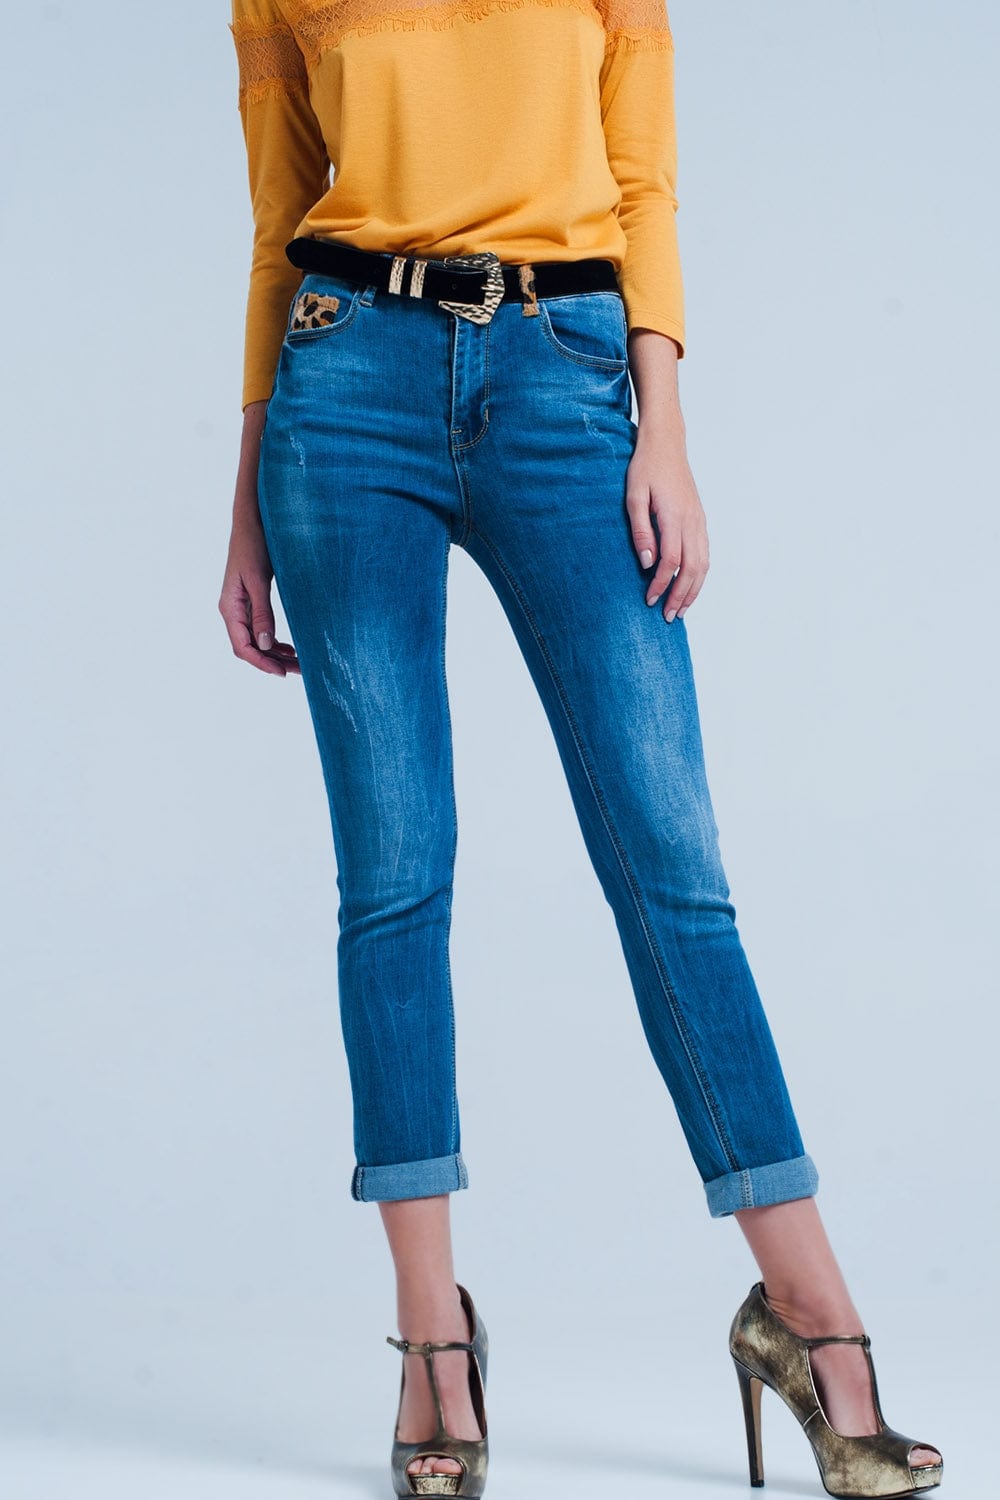 Q2 Women's Jean Skinny Jeans with Leopard Detail